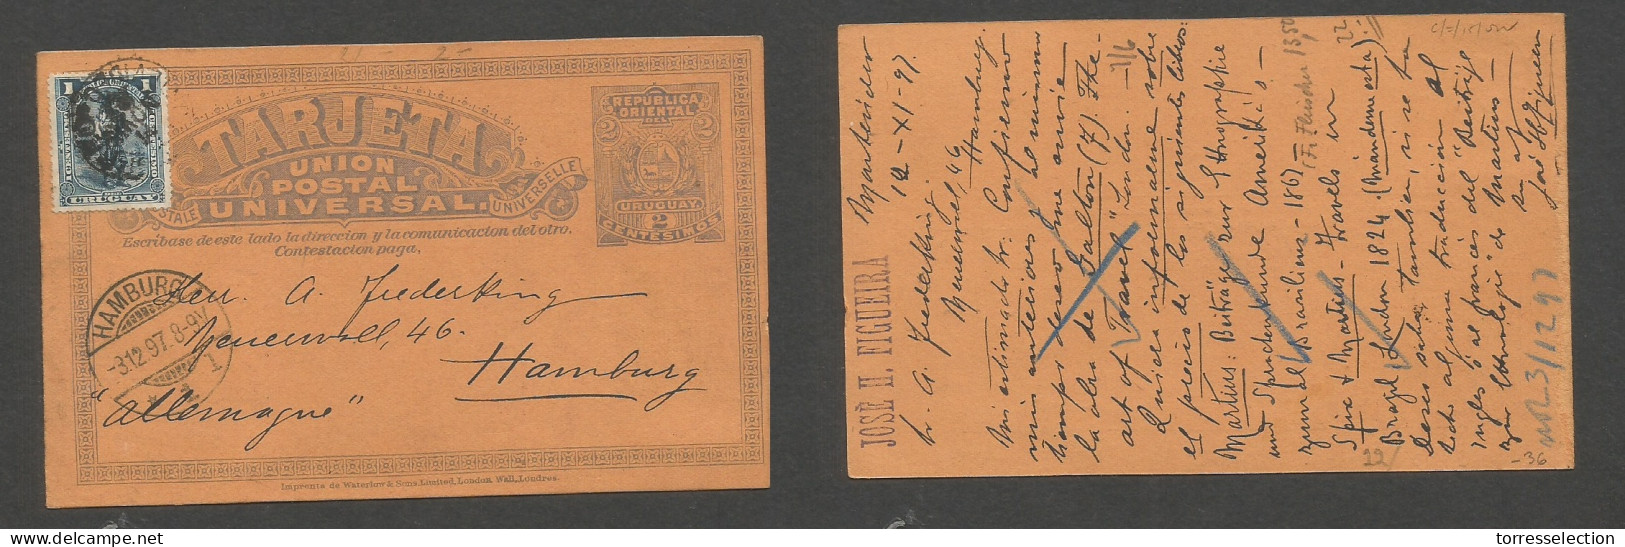 URUGUAY. 1897 (14 Nov) Mont - Germany, Hamburg (3 Dec) 2c Lilac/cream + Adtl Stat Card. Fine Used + Arrival On Front. XS - Uruguay